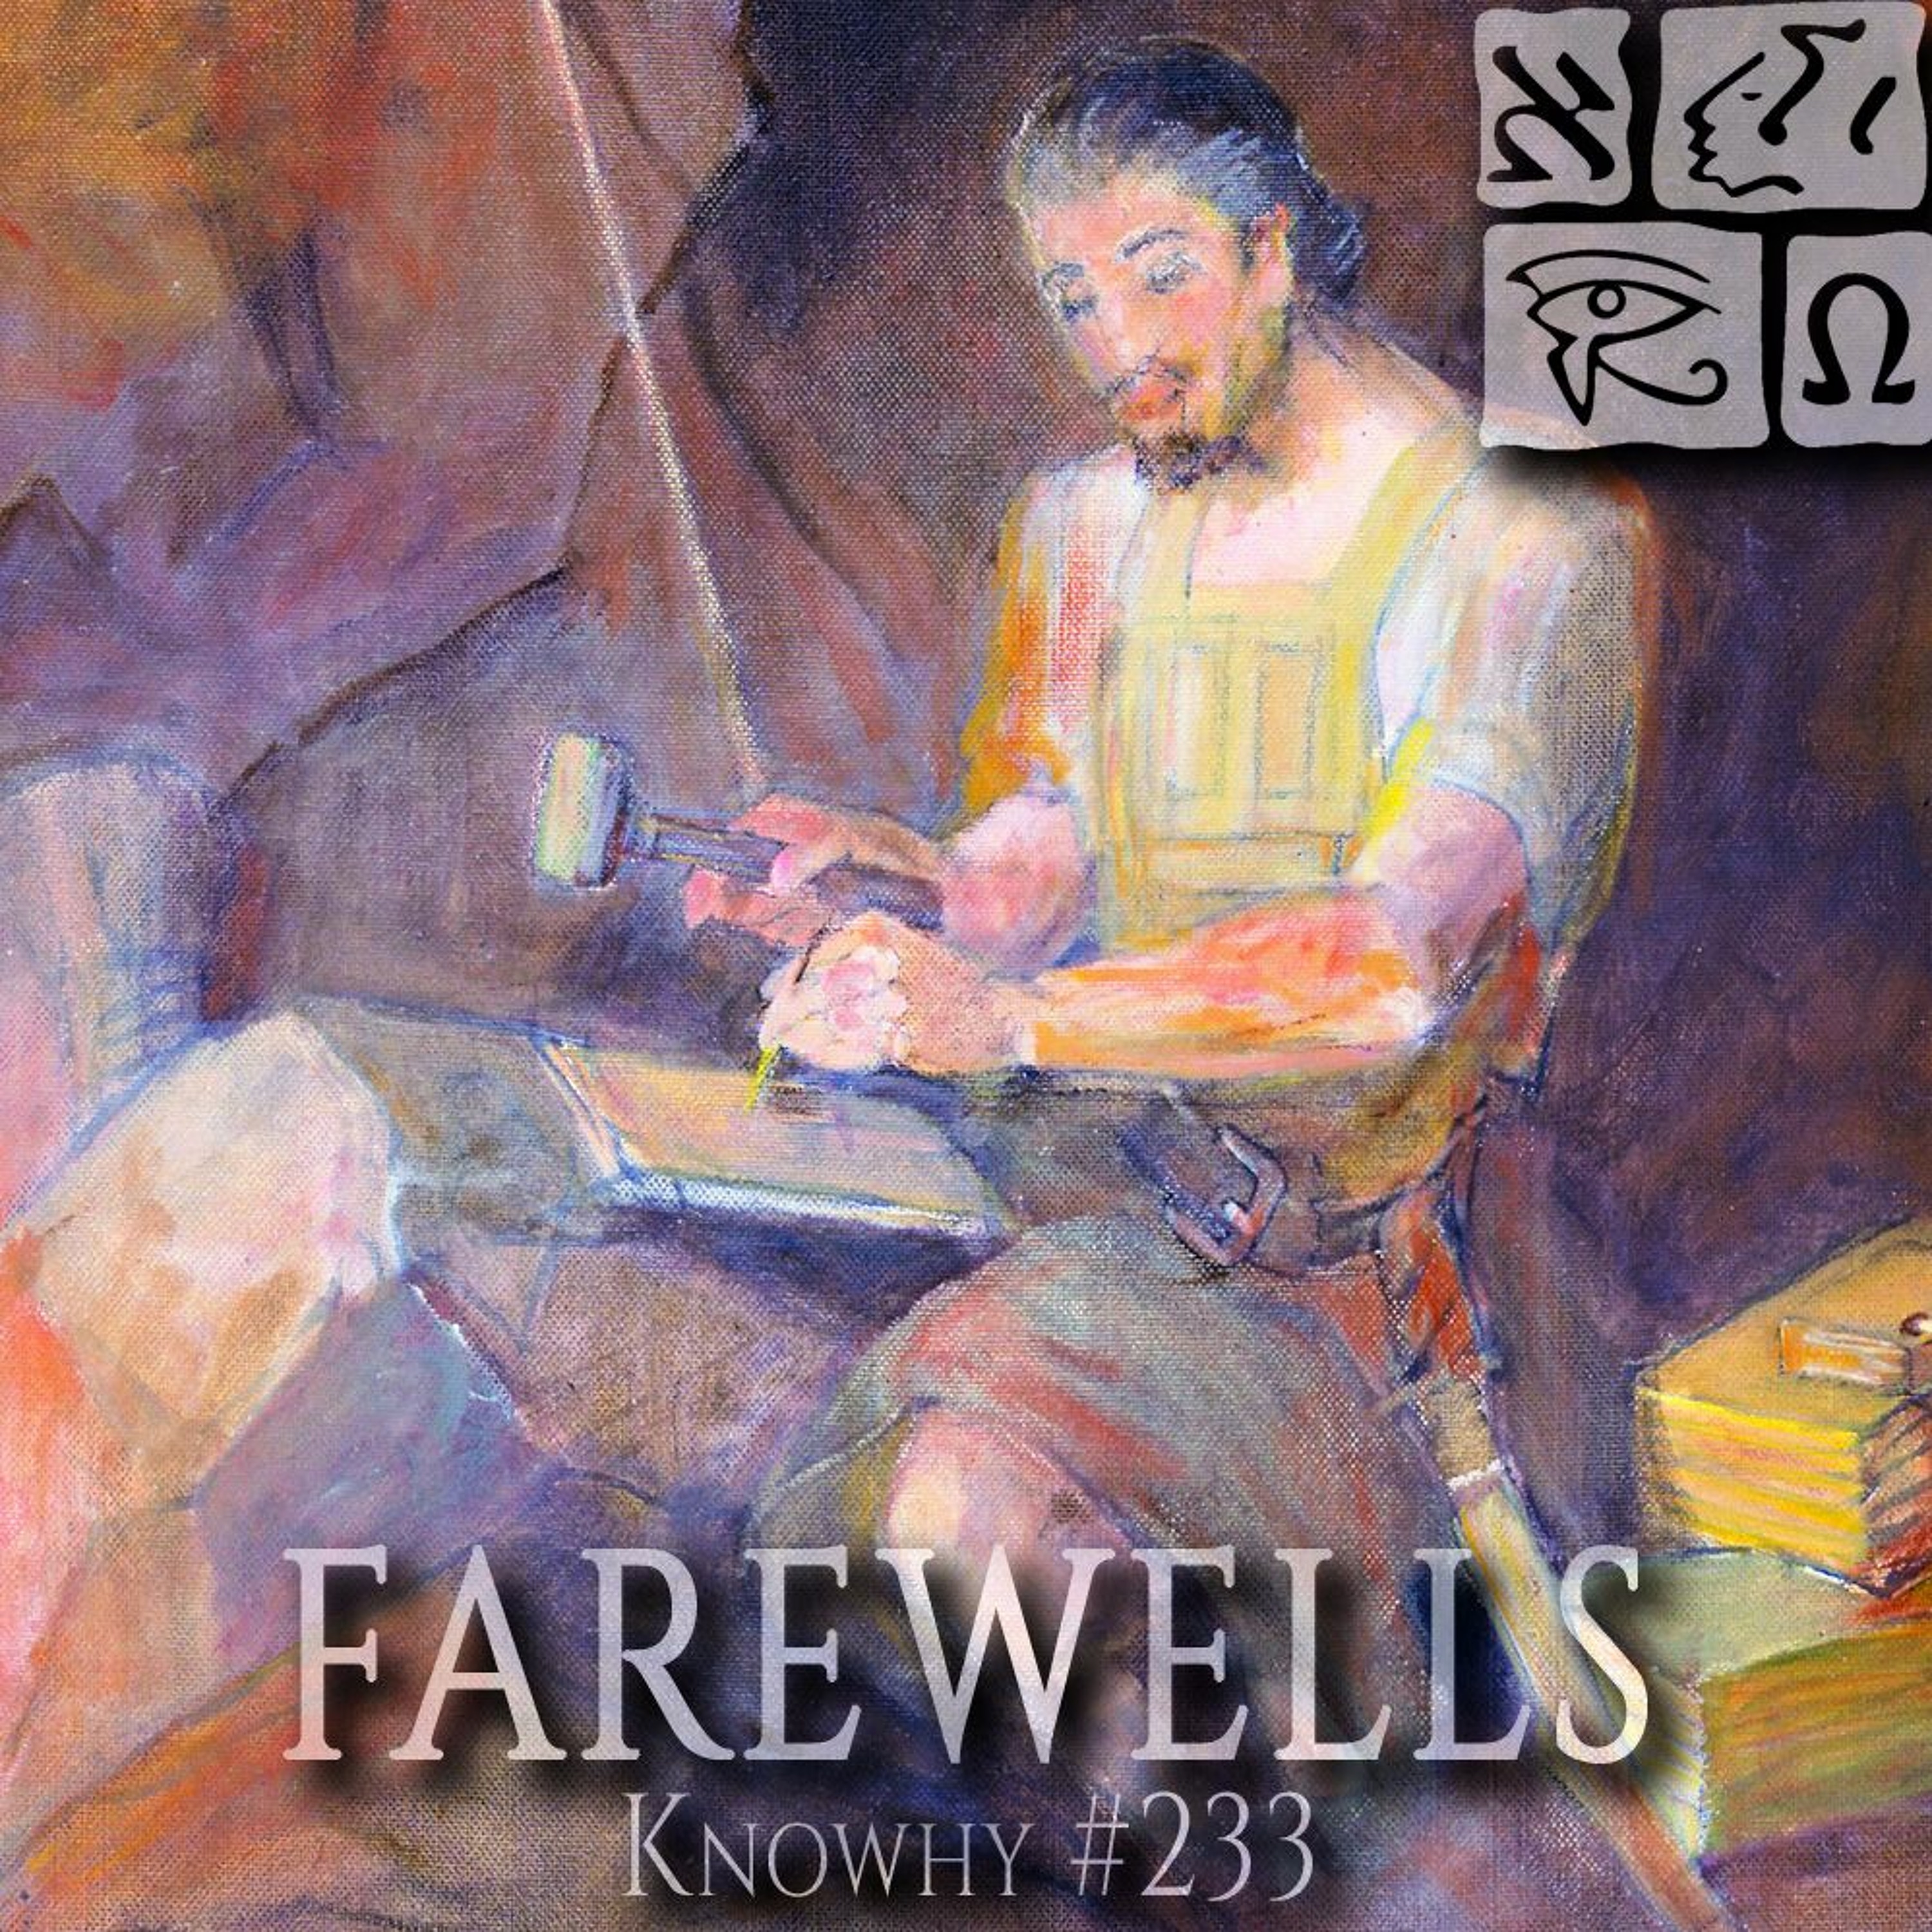 Why Did Moroni Write So Many Farewells? #233